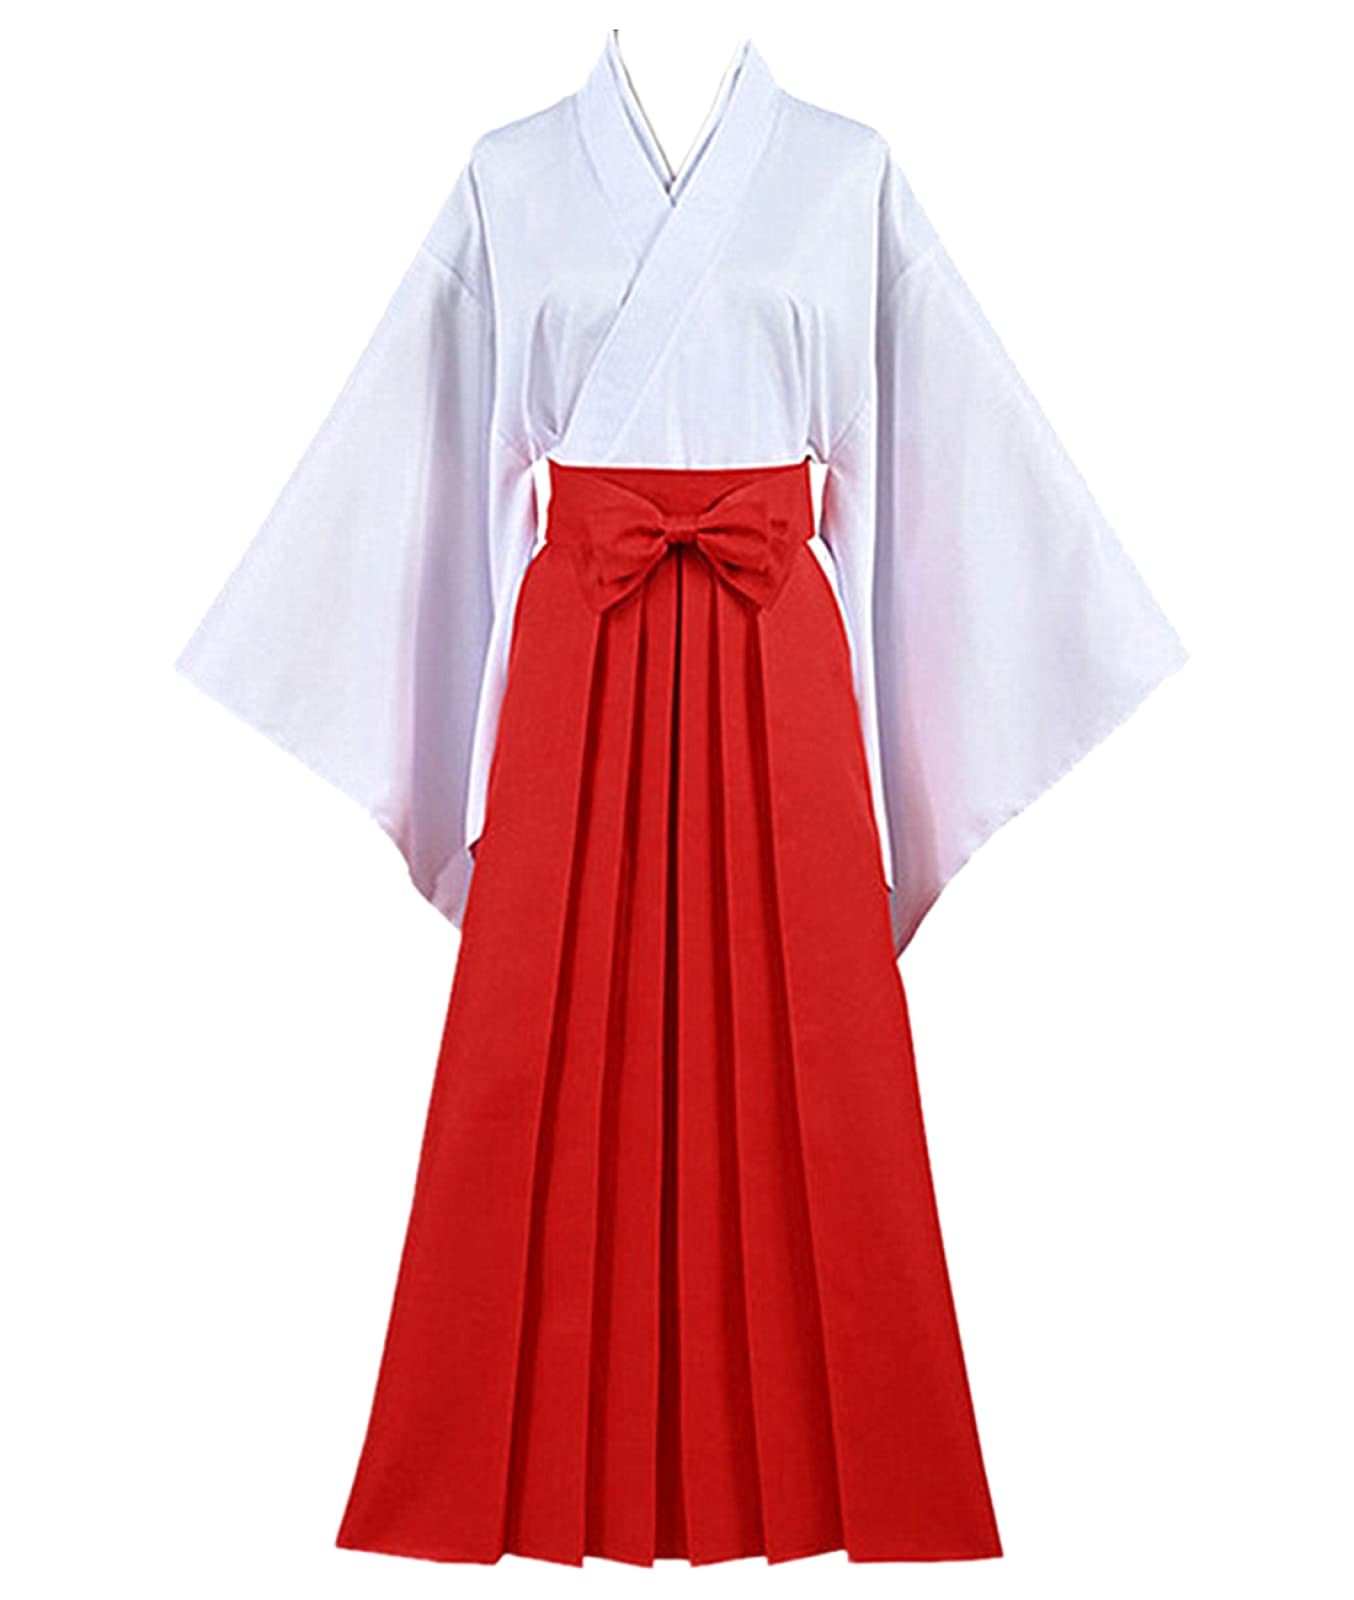 Jujutsu Kaisen Cosplay Iori Utahime Outfits, Damen Kimono Kleid Kostüm Anzug für Anime Fans Cosplay, Rot, M